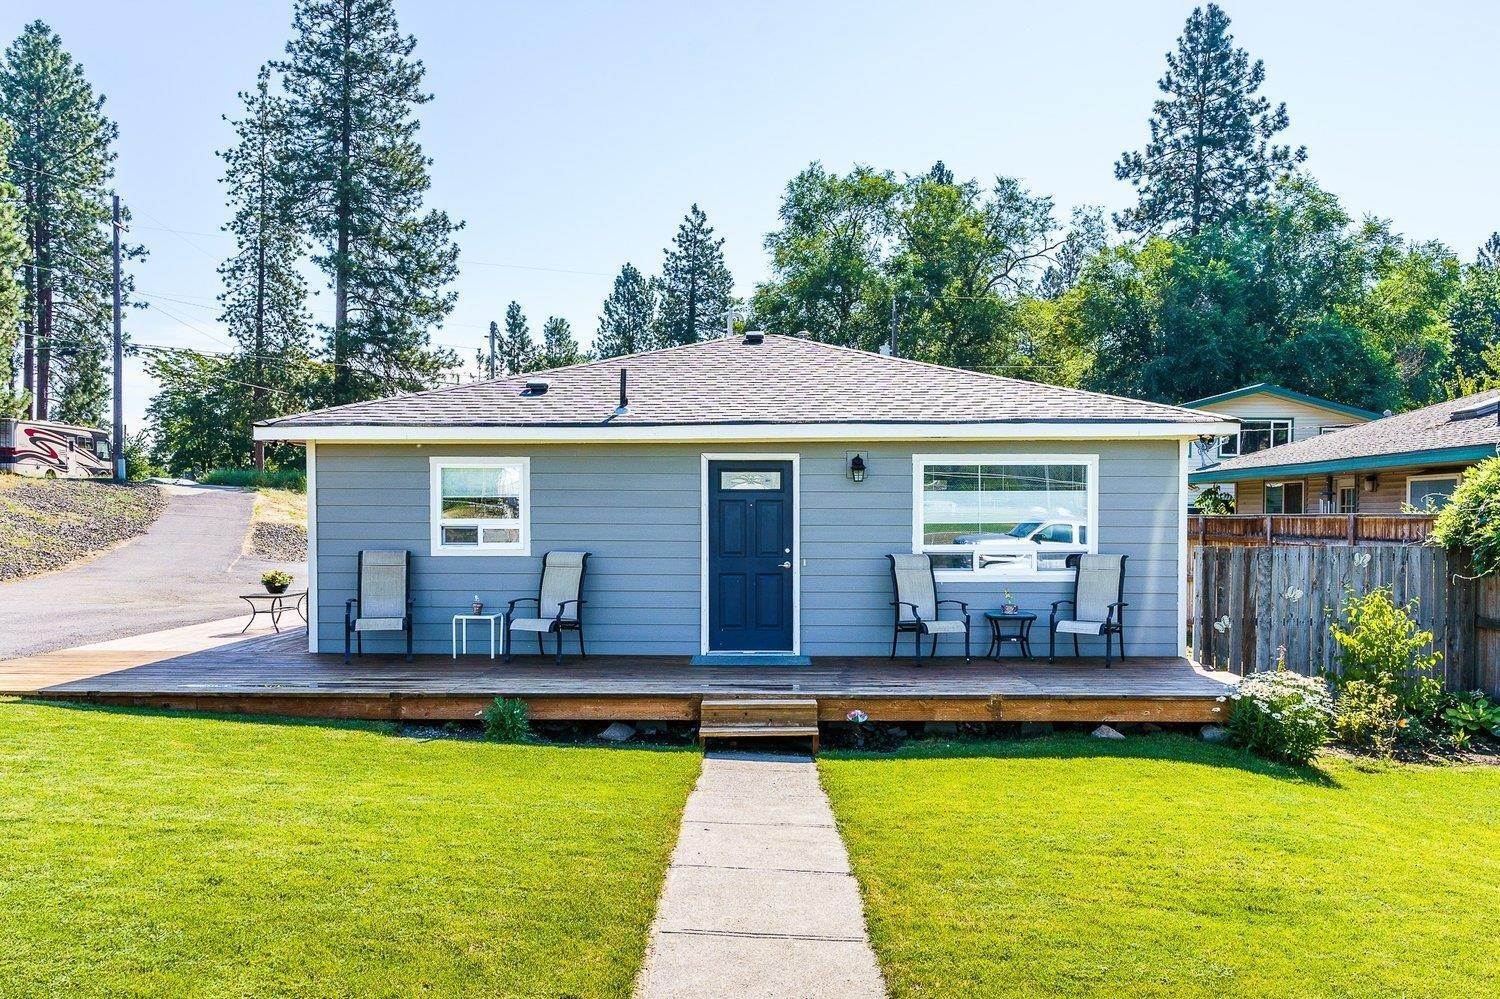 Single Family Homes for Sale at 1105 S Raymond Road Spokane Valley, Washington 99206 United States